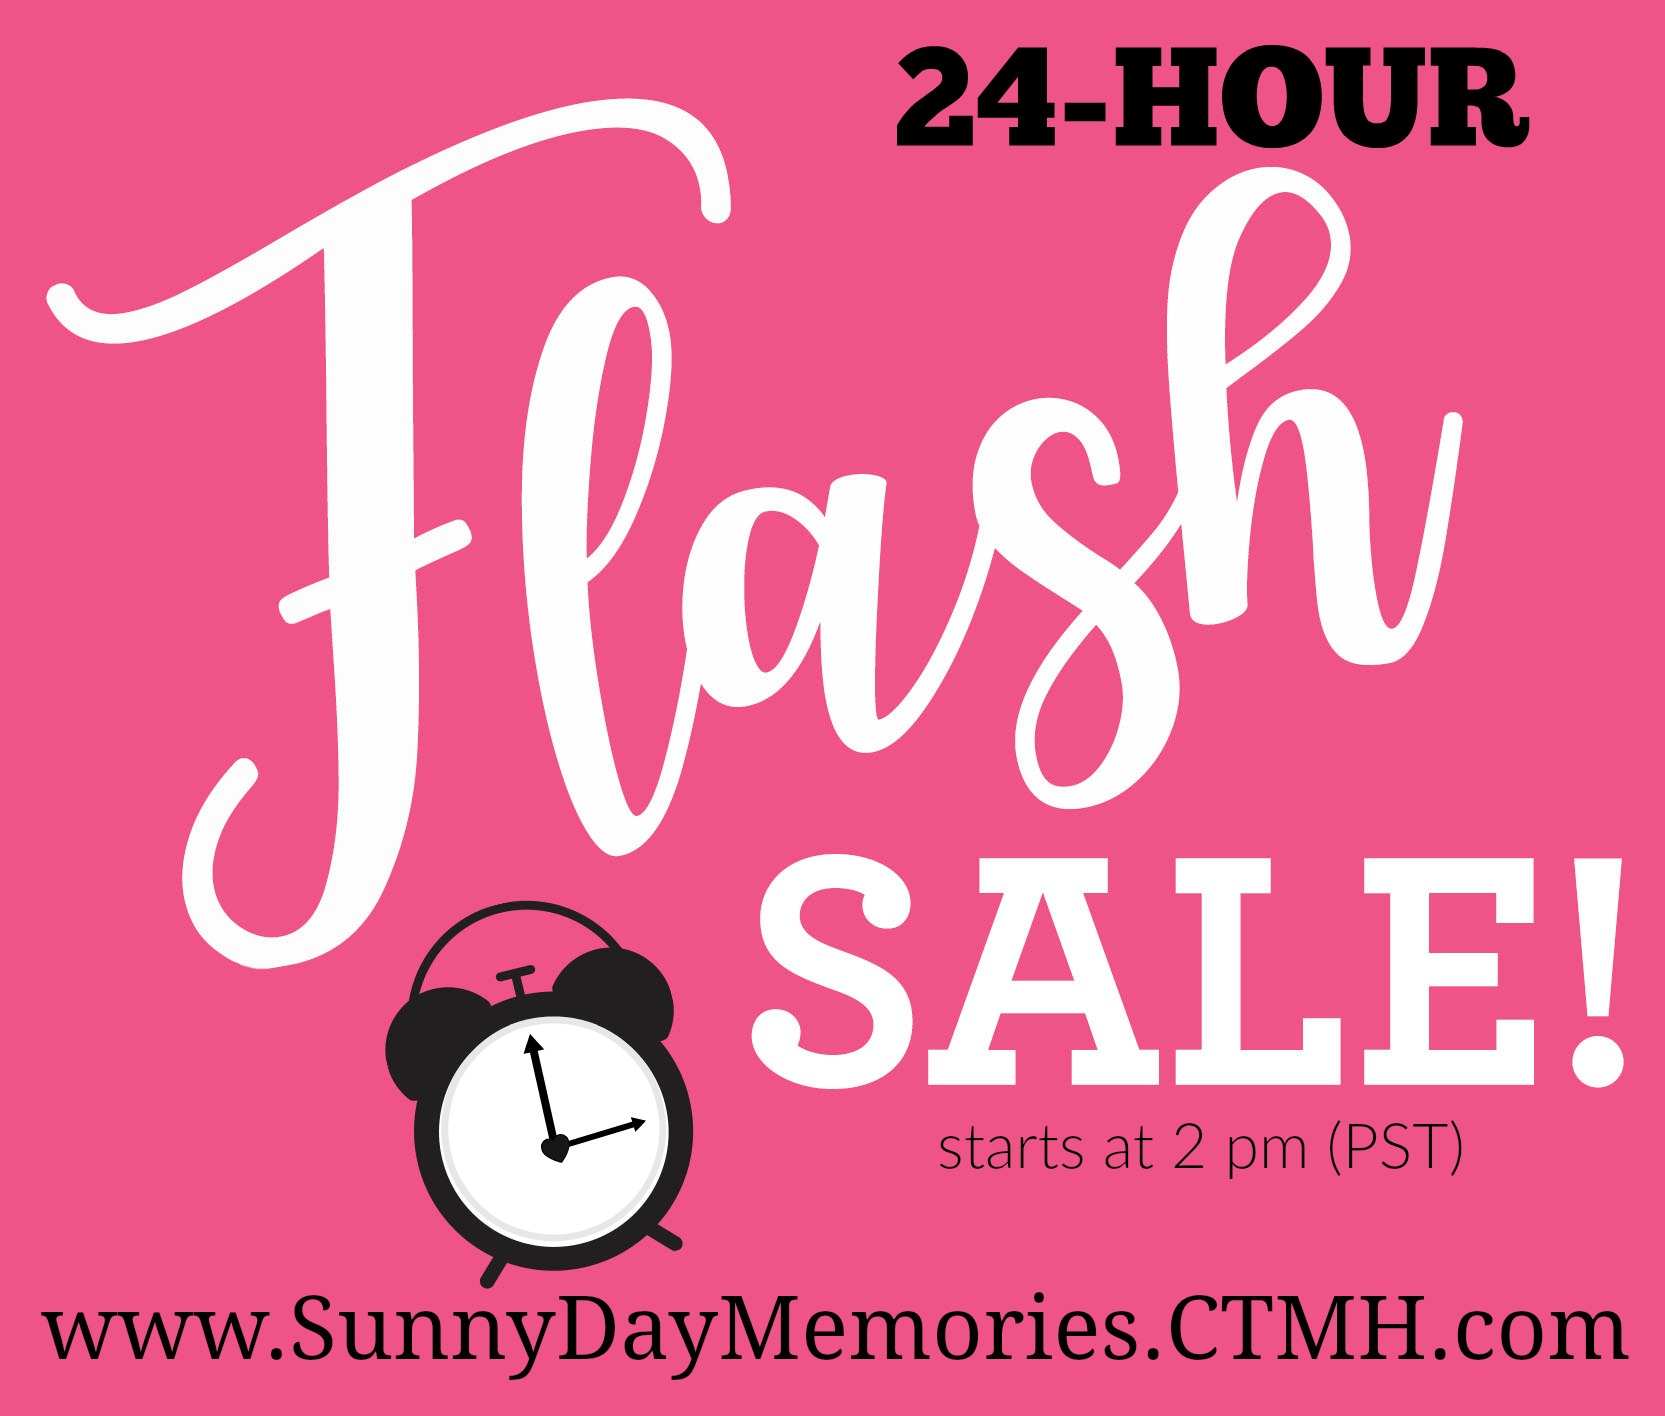 CTMH 24-Hour Flash Sale